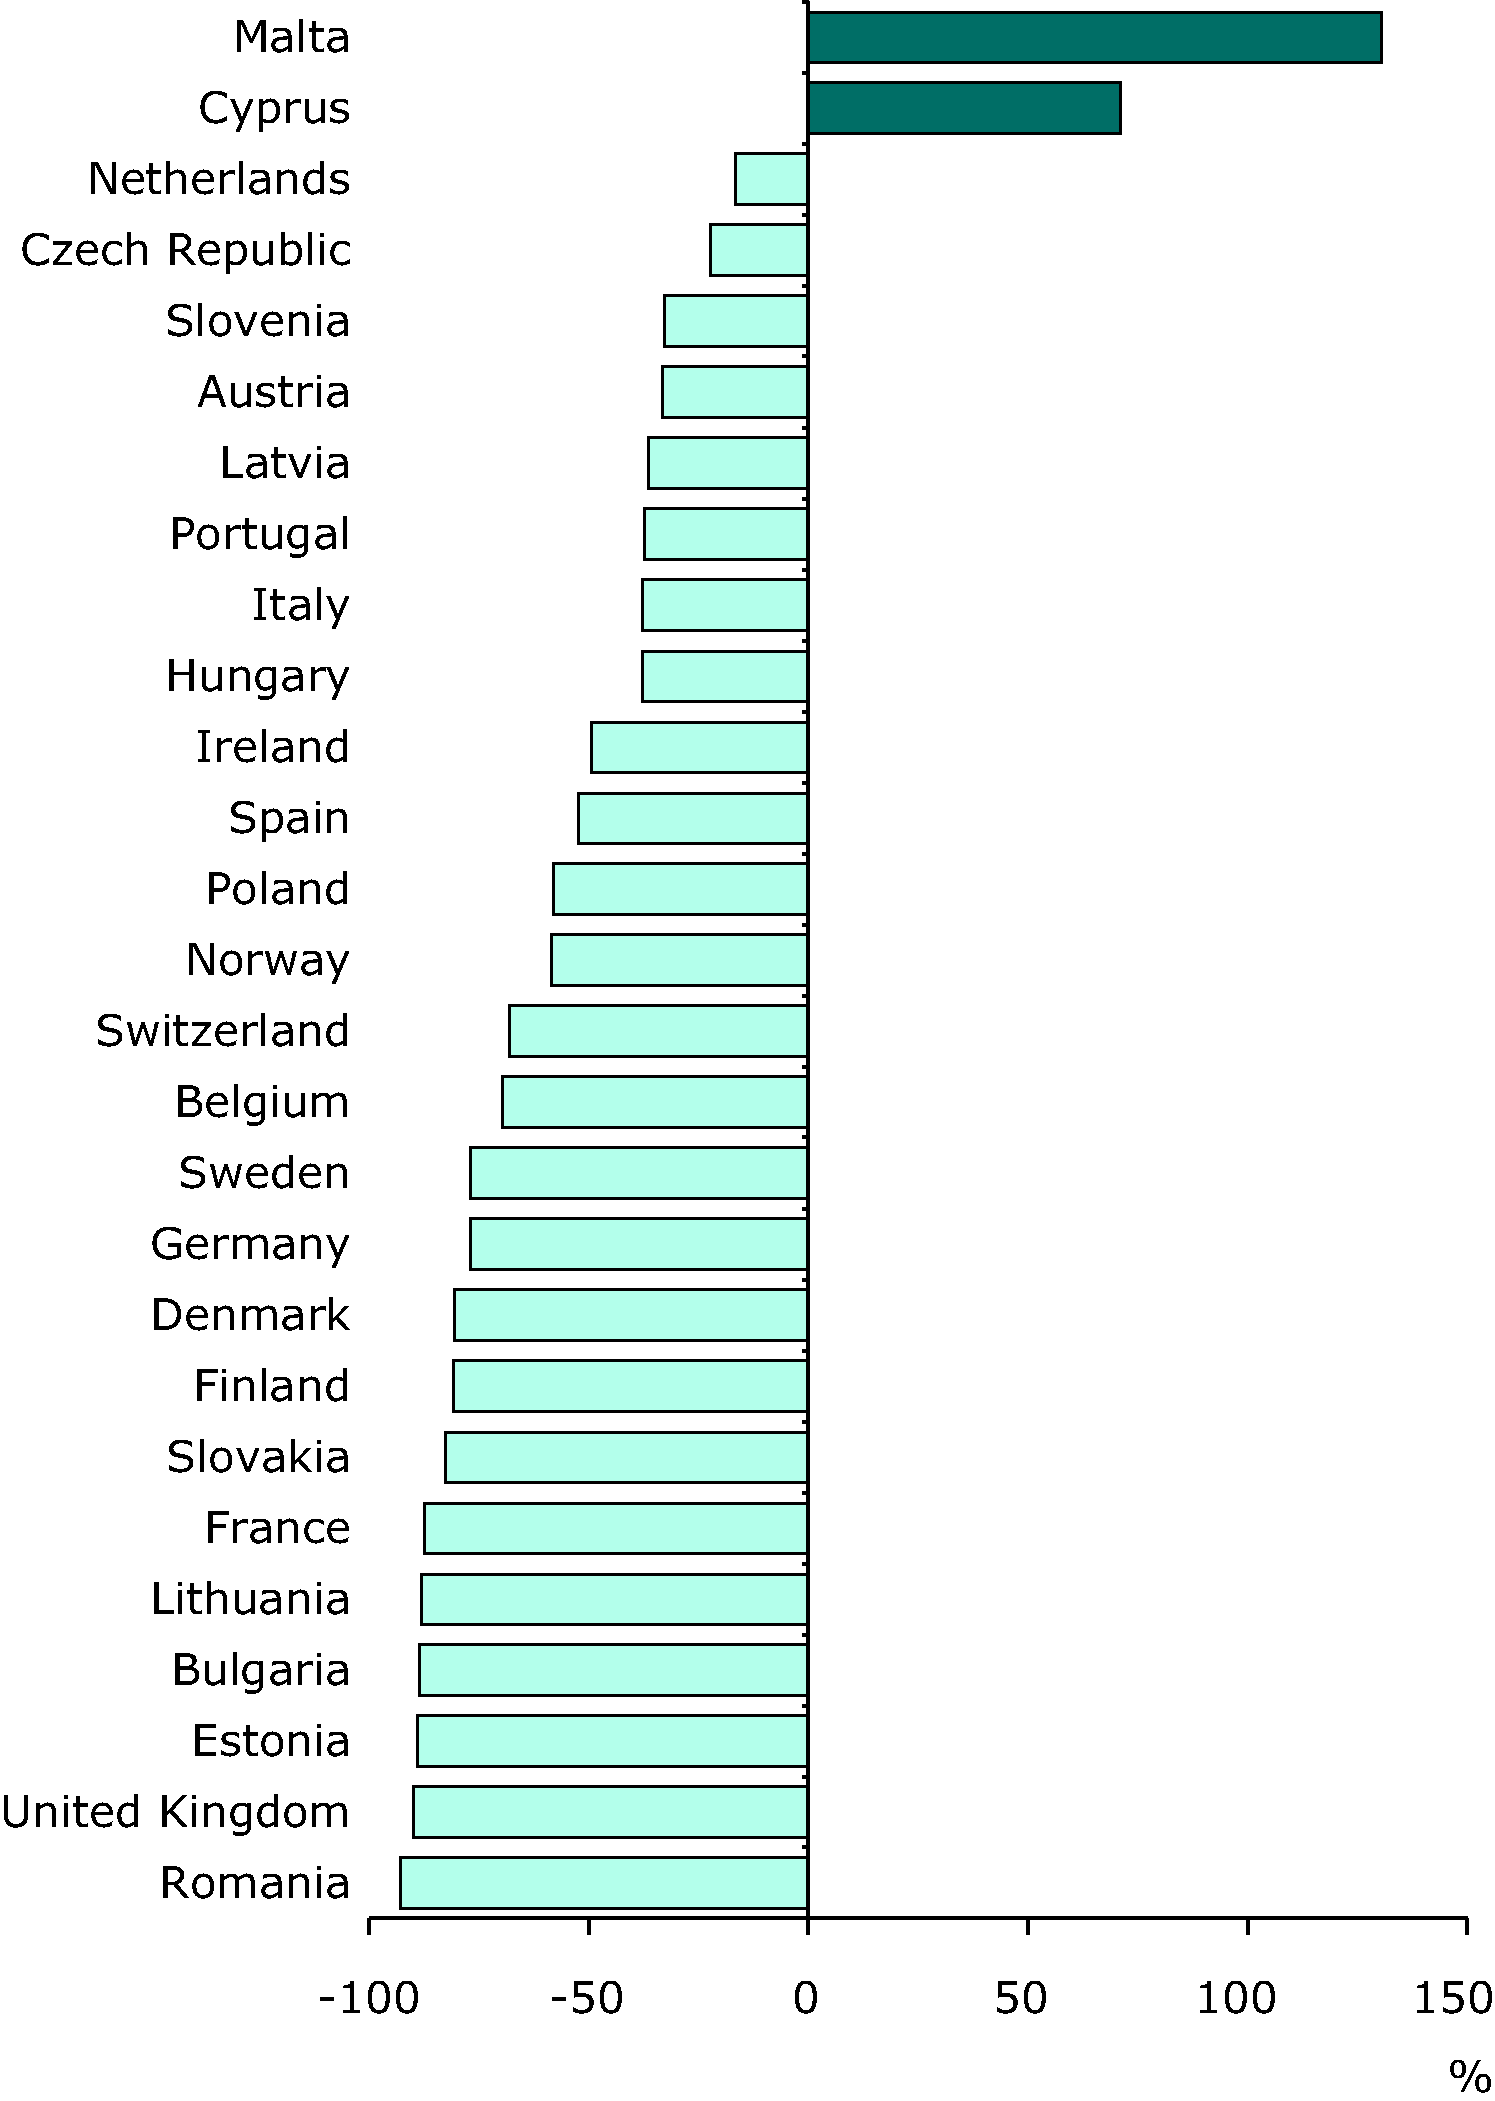 Change (%) in cadmium emissions 1990-2009 (EEA member countries)